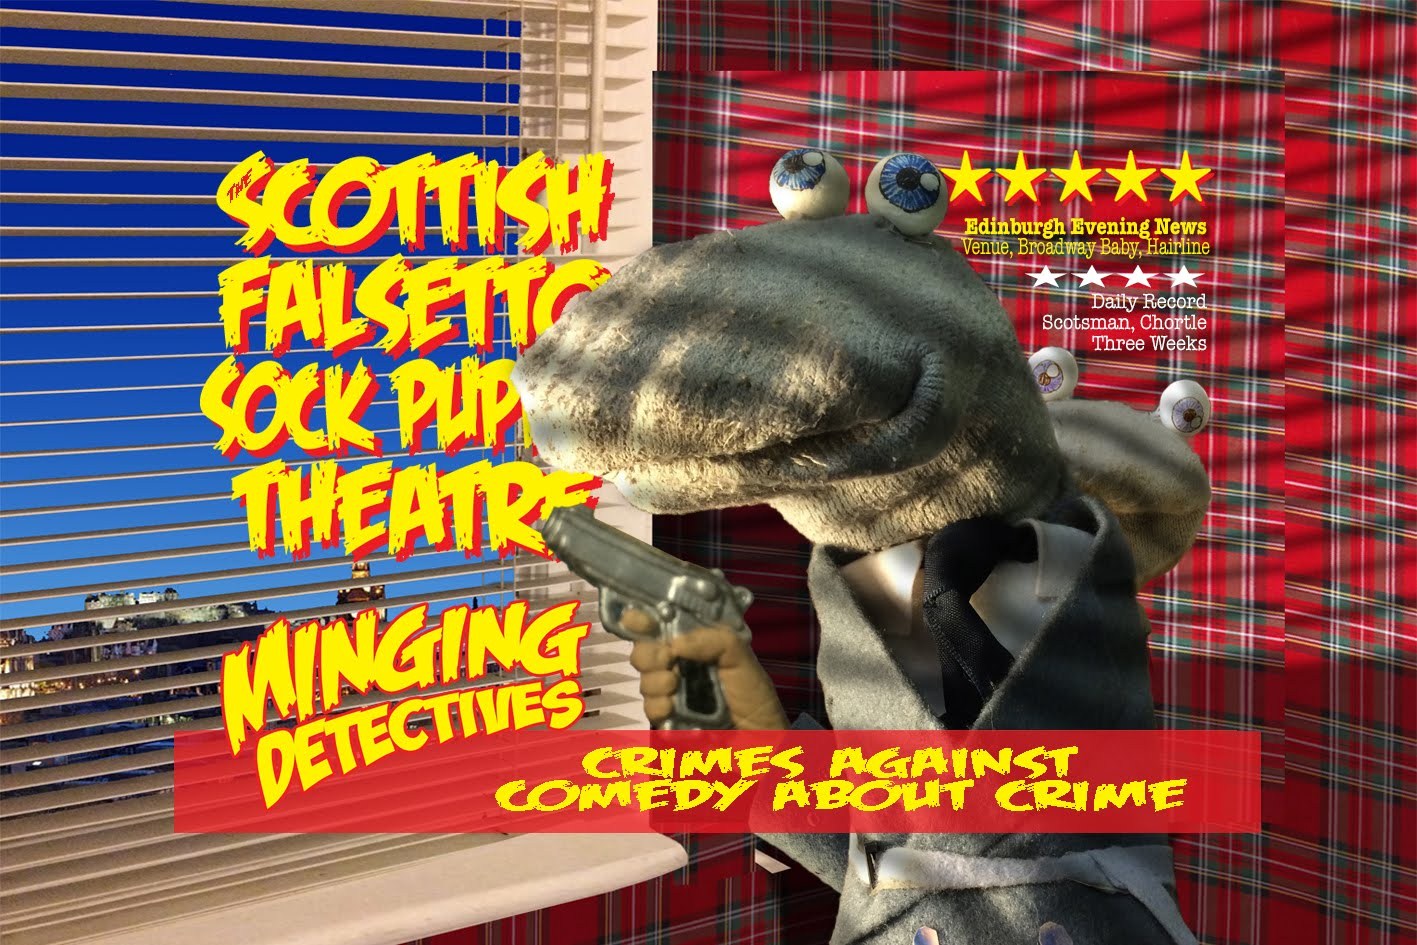 The Scottish Falsetto Sock Puppet Theatre: Minging Detectives